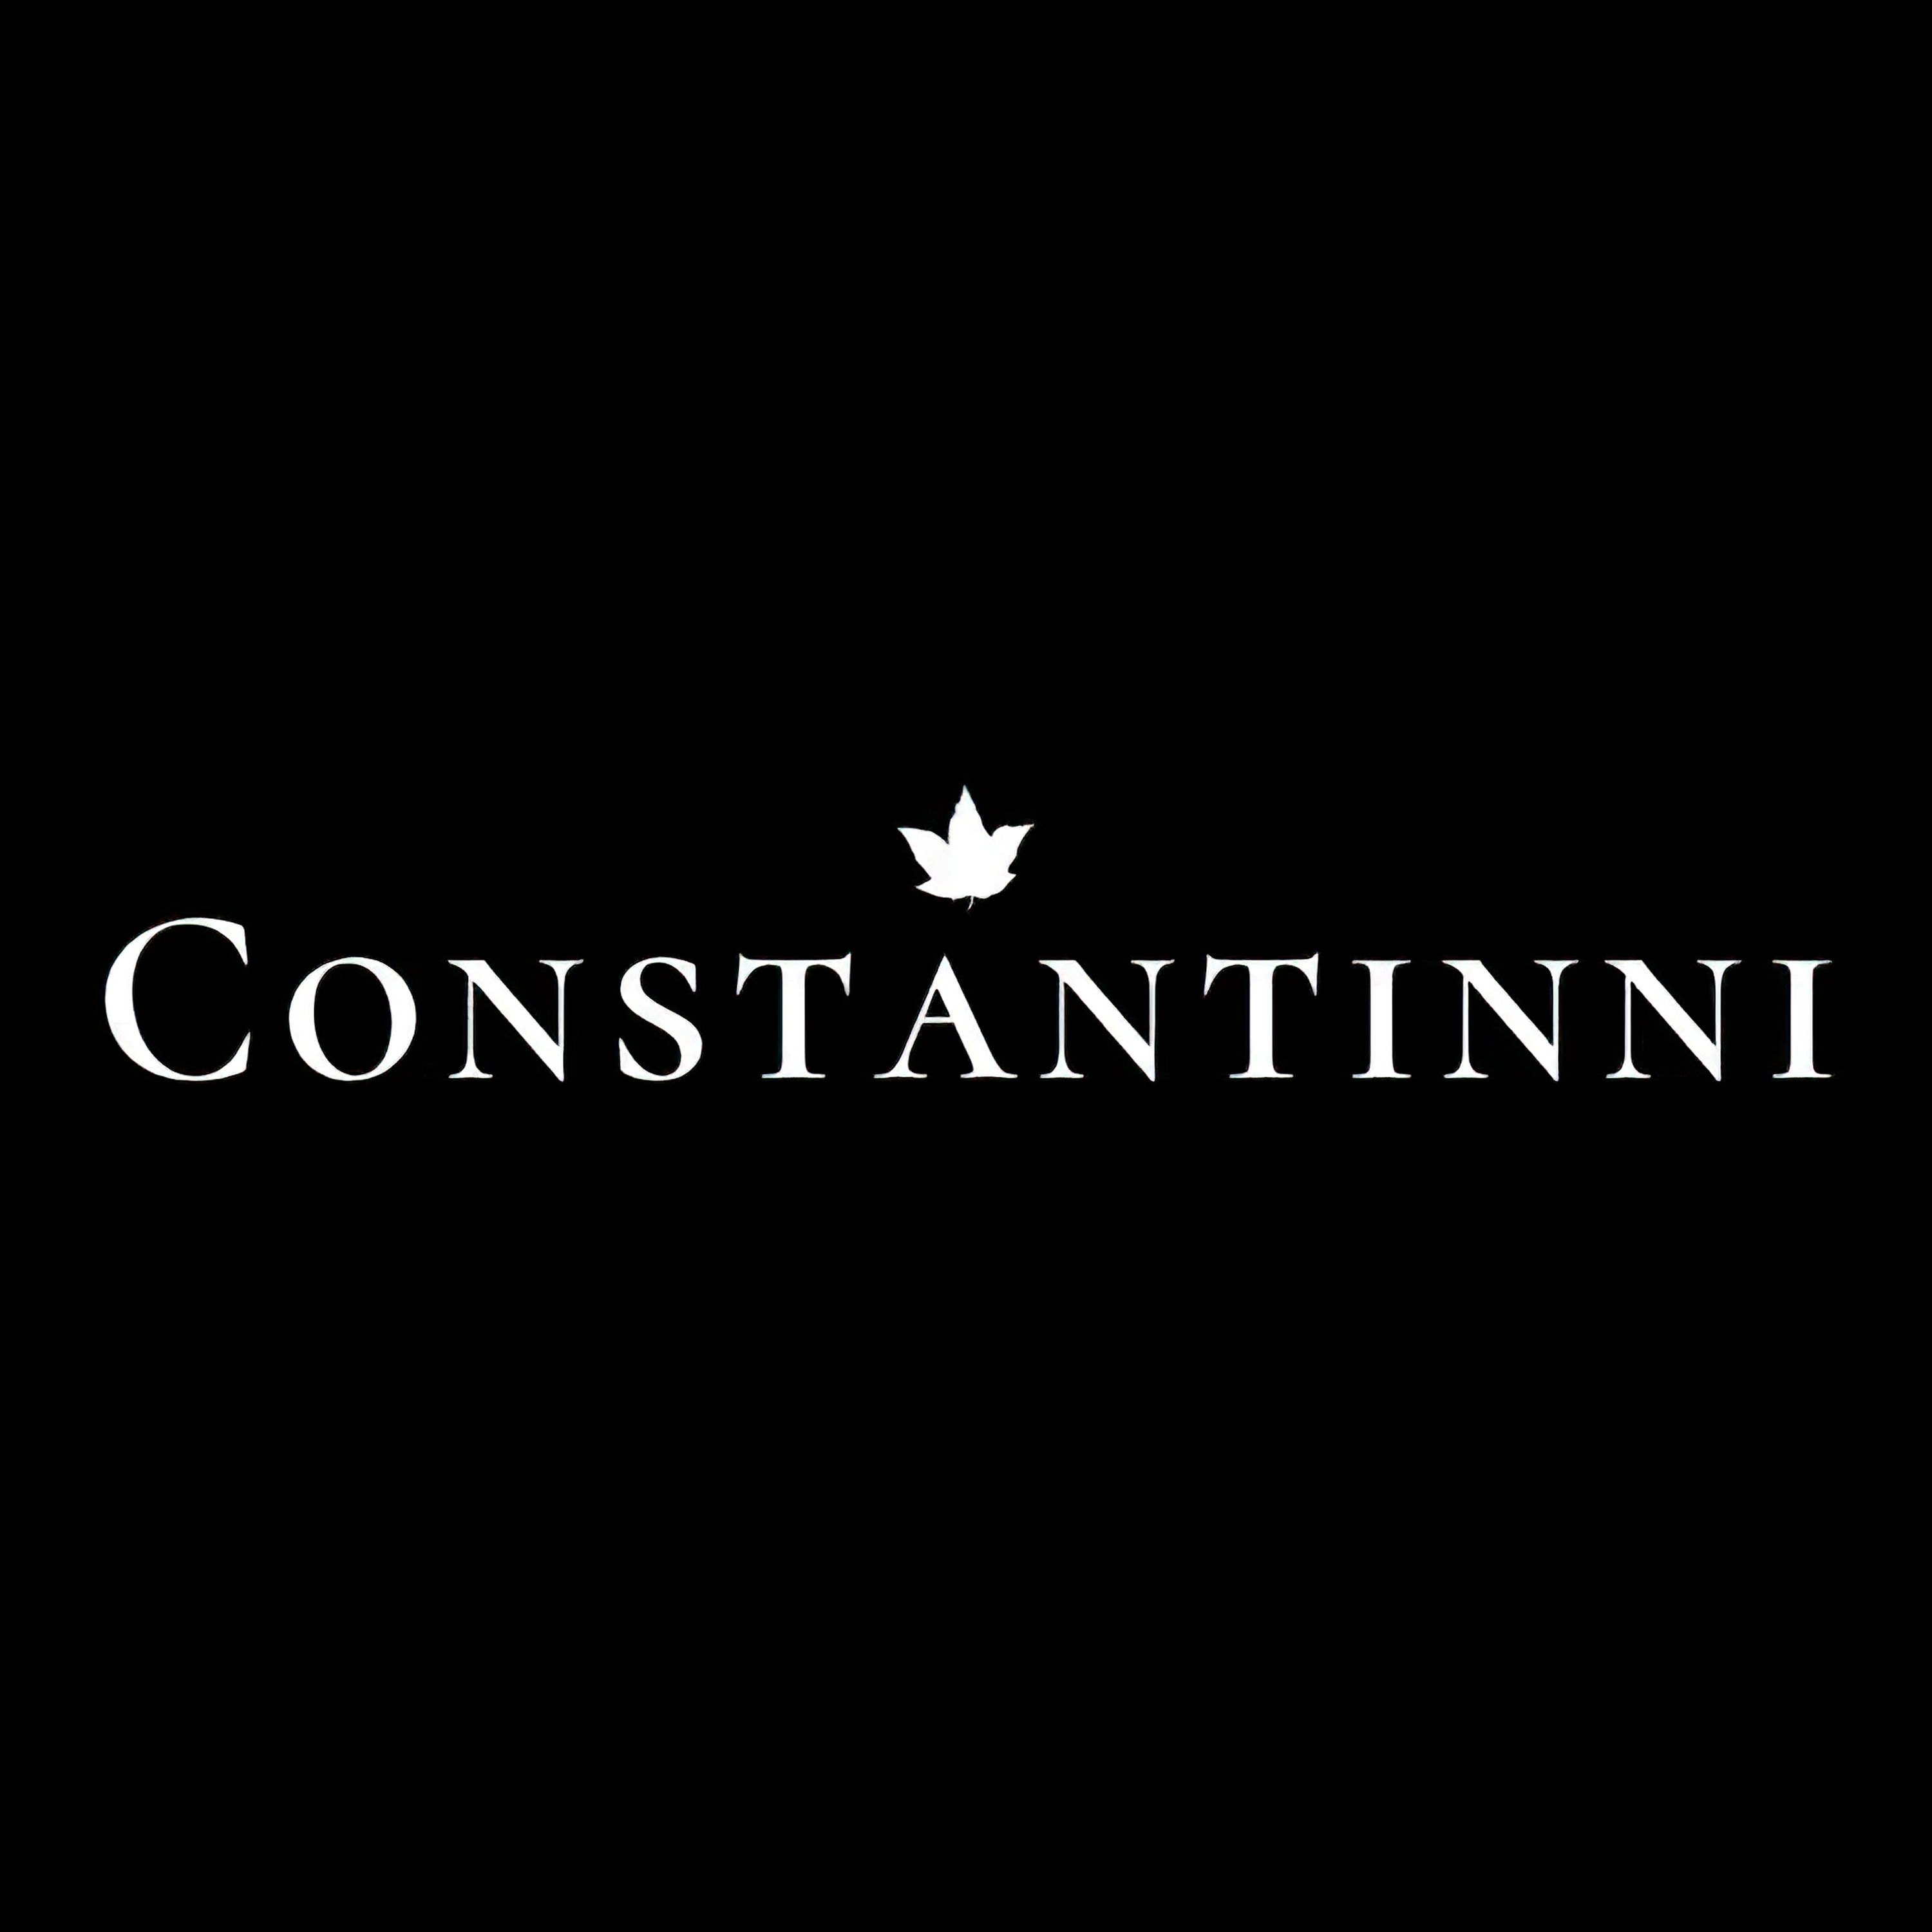 Constantinni